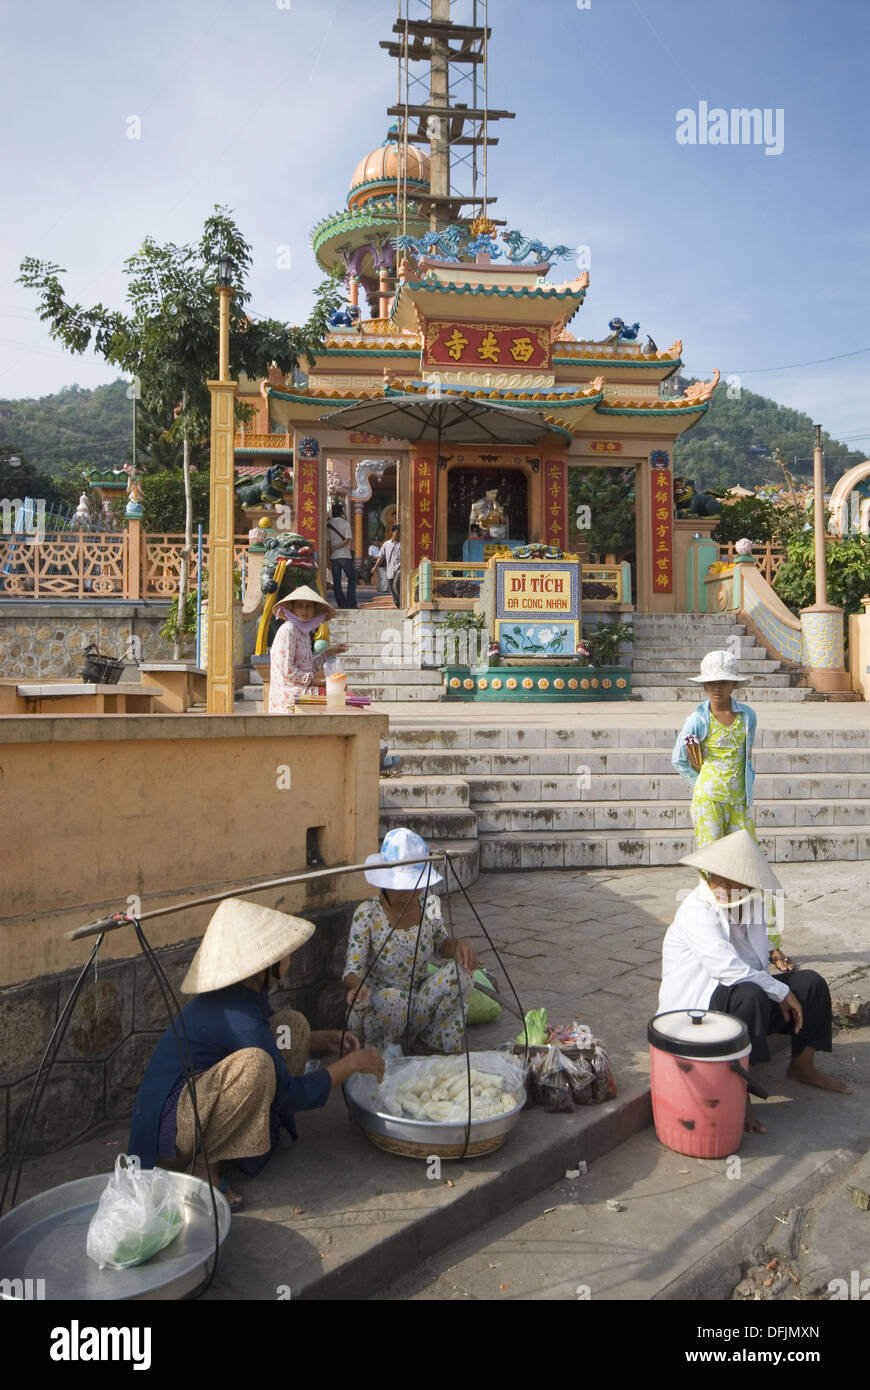 Tat An temple, Chau Doc, Vietnam Stock Photo